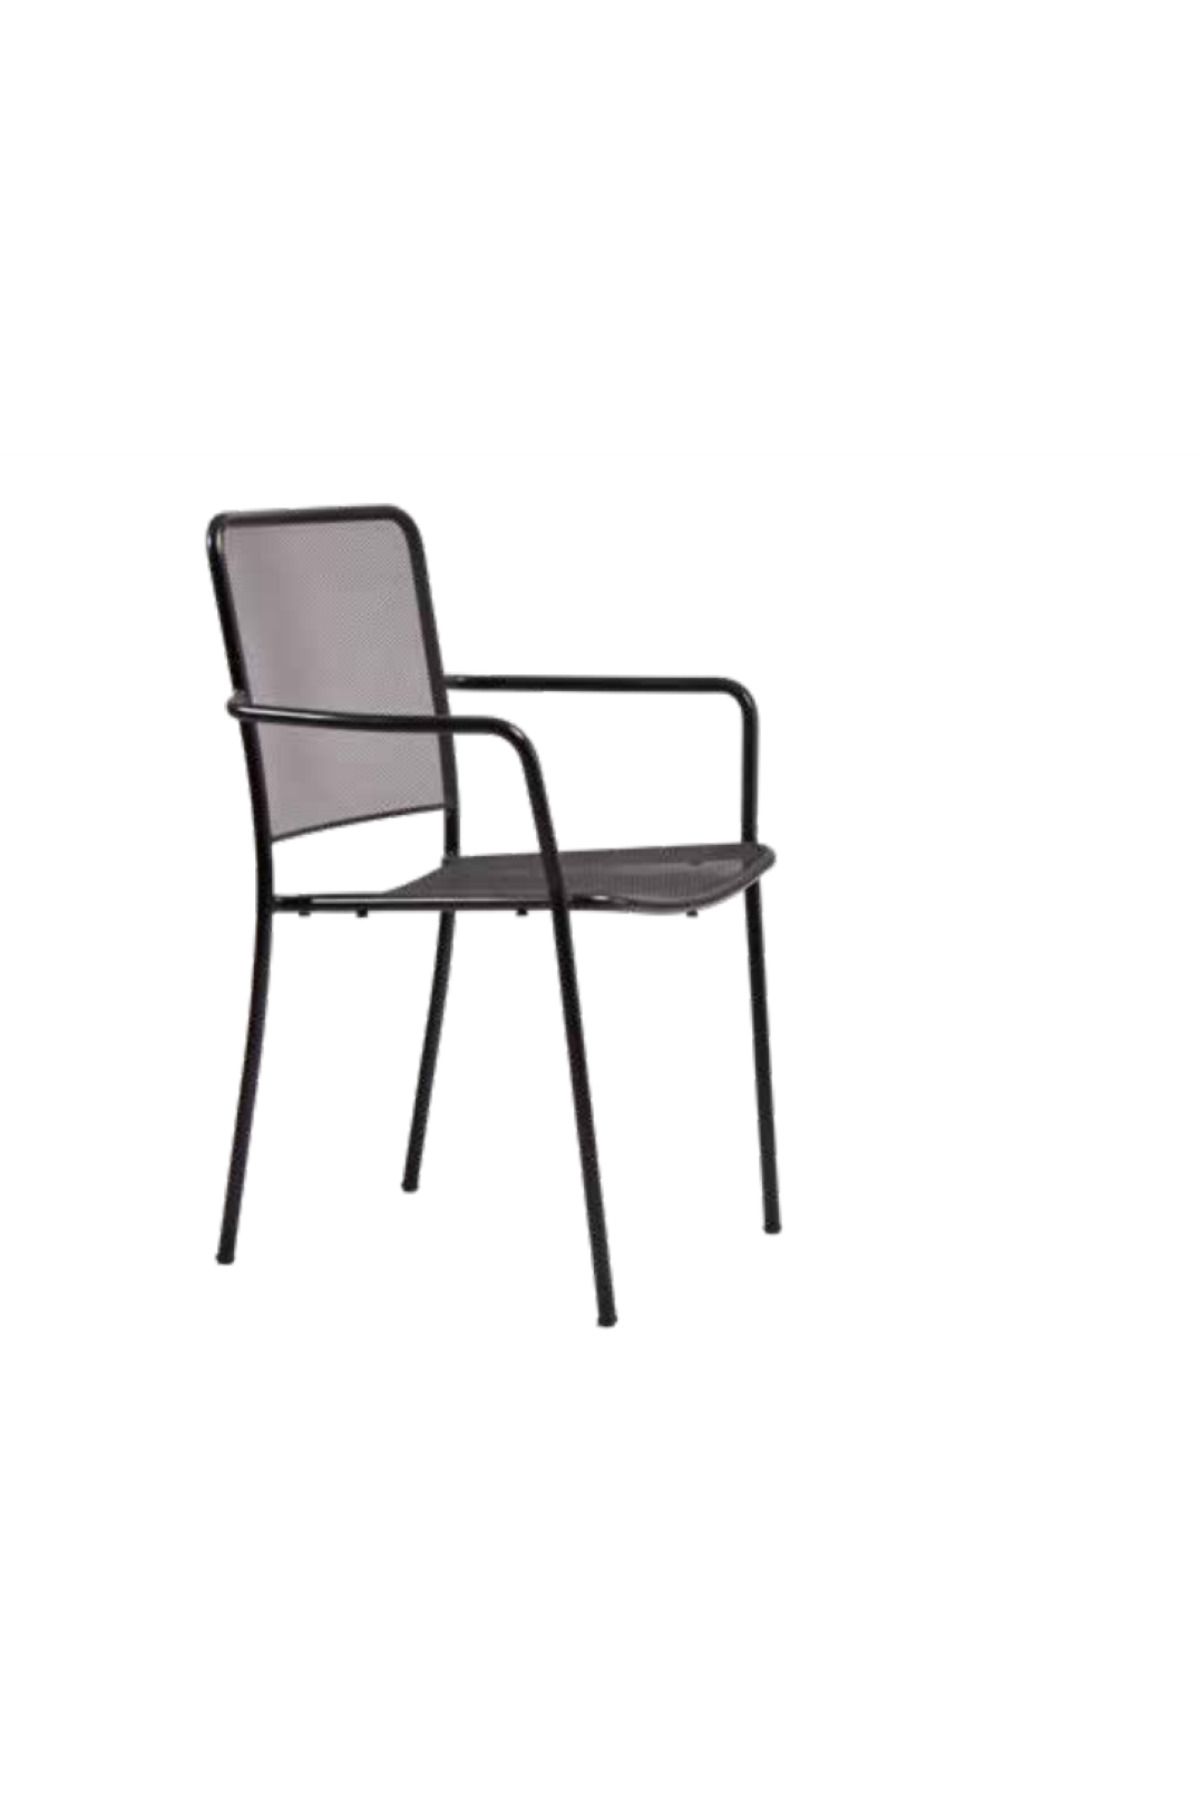 BENGİ TİCARET Sandalye 1995 Zus264 Papel Sırt Model Ahşap-metal Renk Kolçaklı Inovatif El Yapım